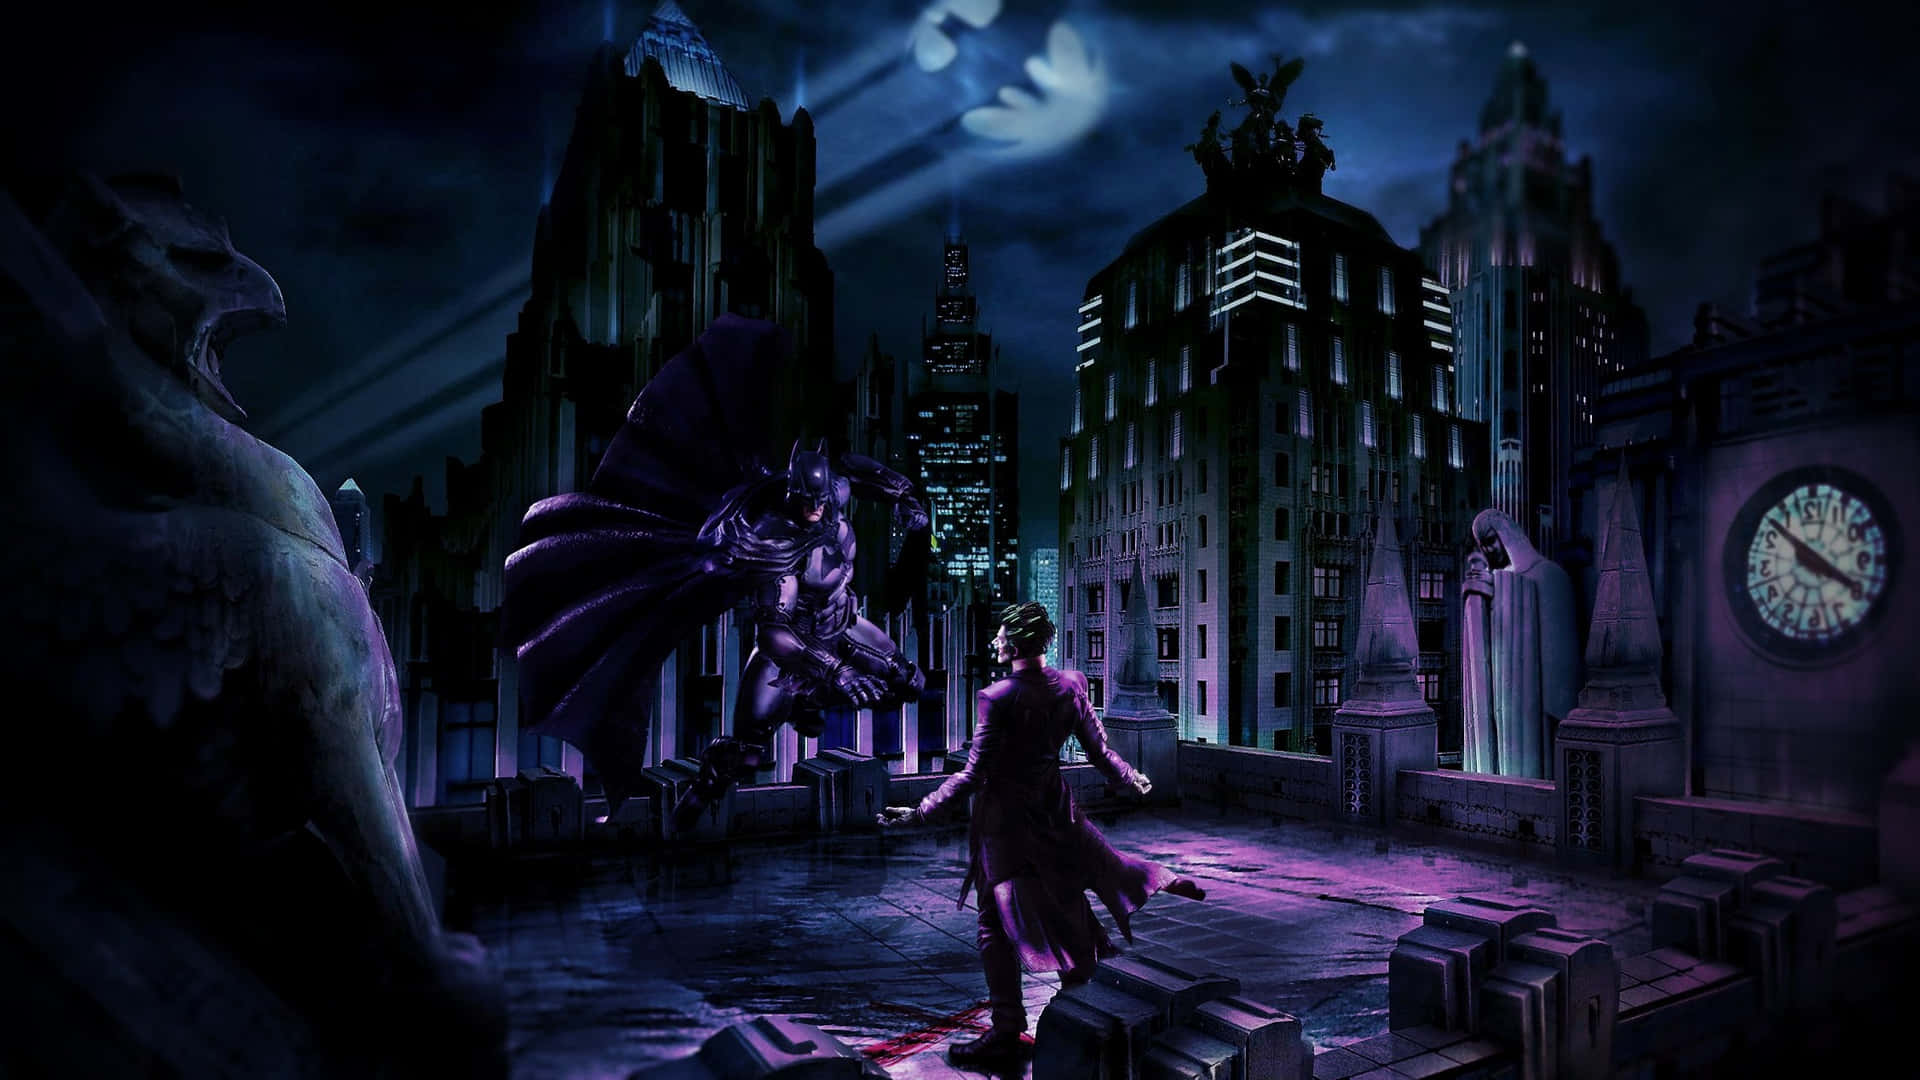 The Dark Knight of Gotham City – Batman with Joker Wallpaper